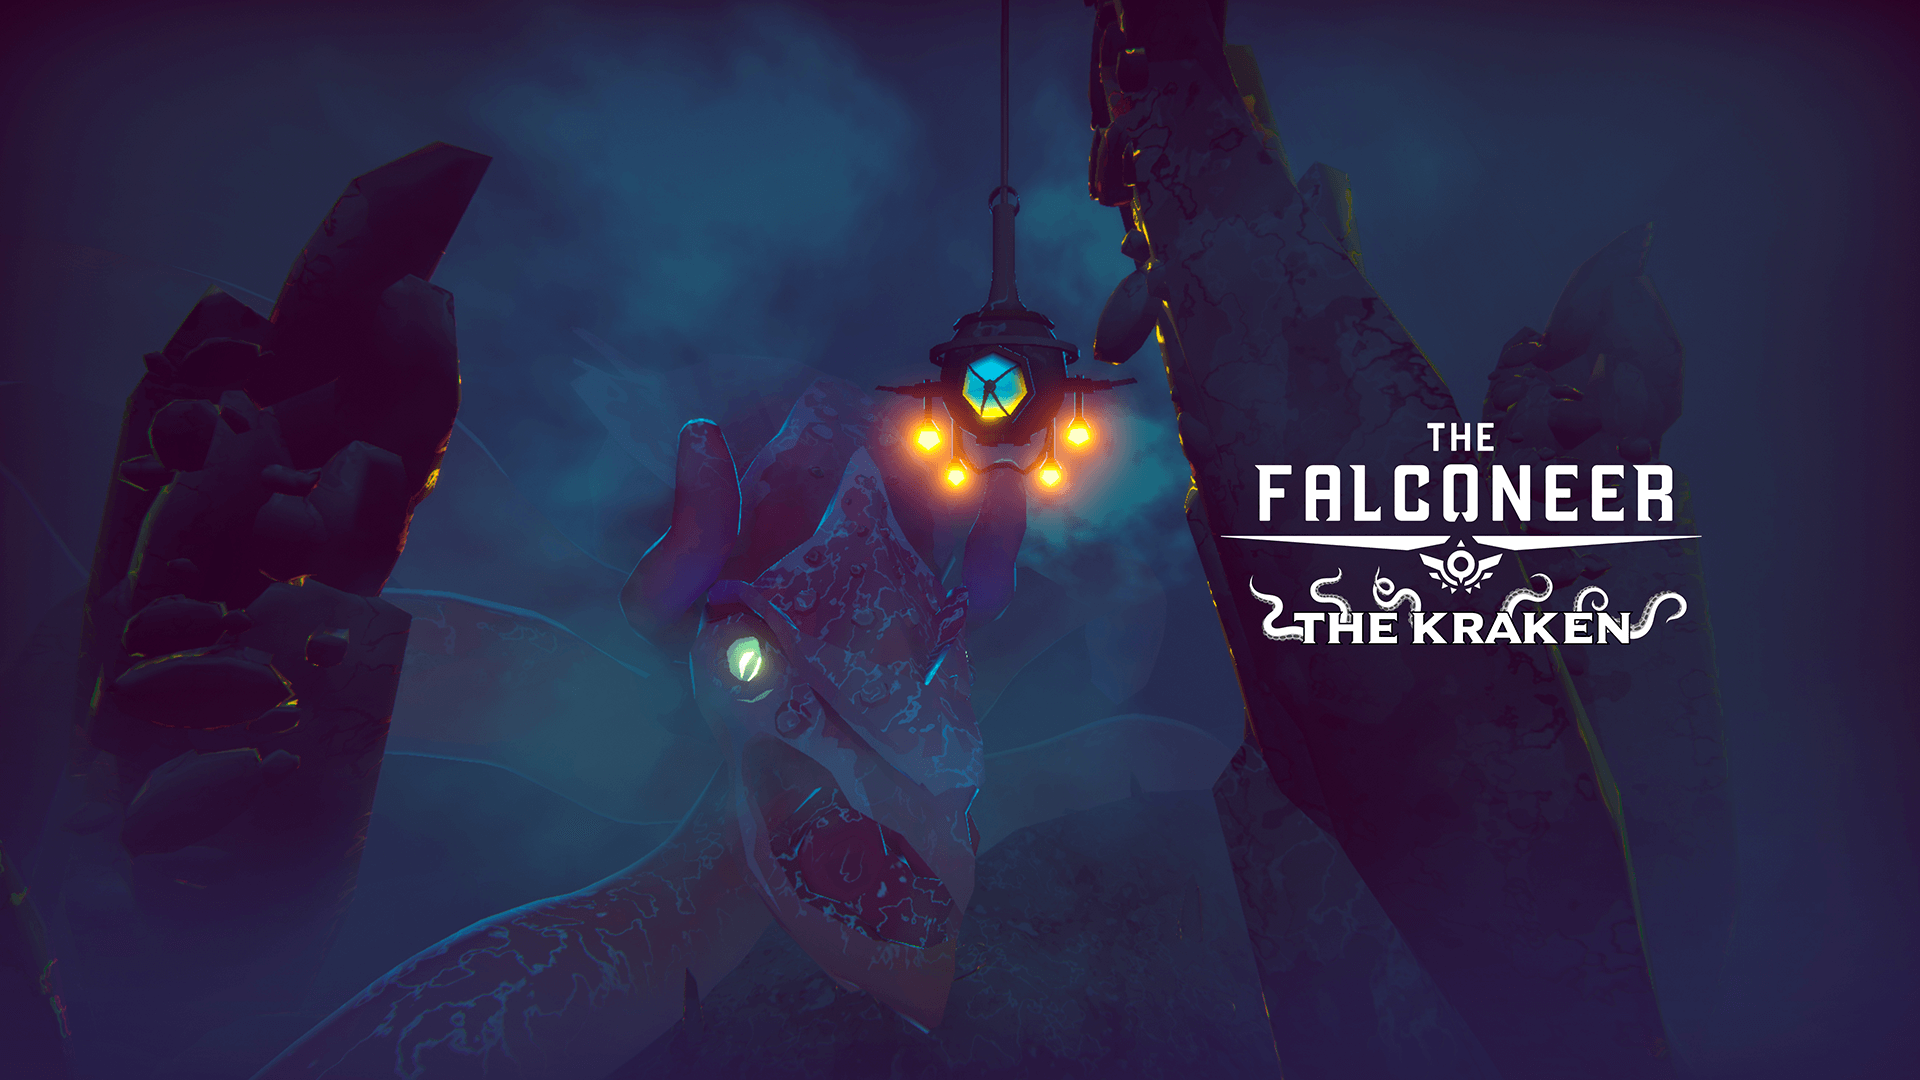 The Falconeer Update: Release "The Kraken"! - air combat game